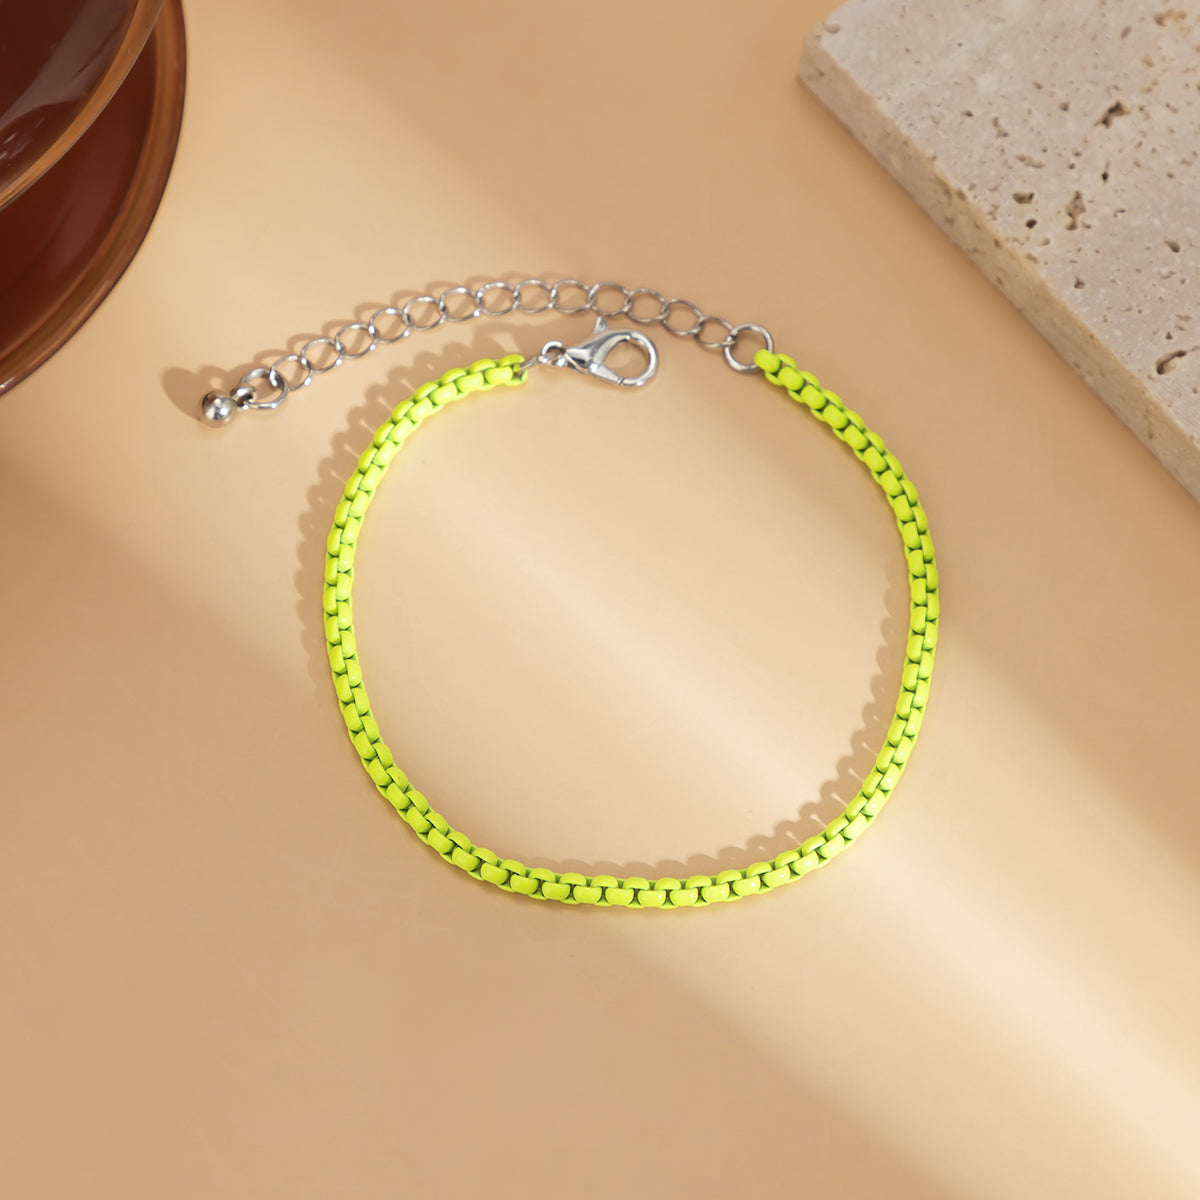 Fluorescent Green Enamel & Silver-Plated Box-Chain Bracelet